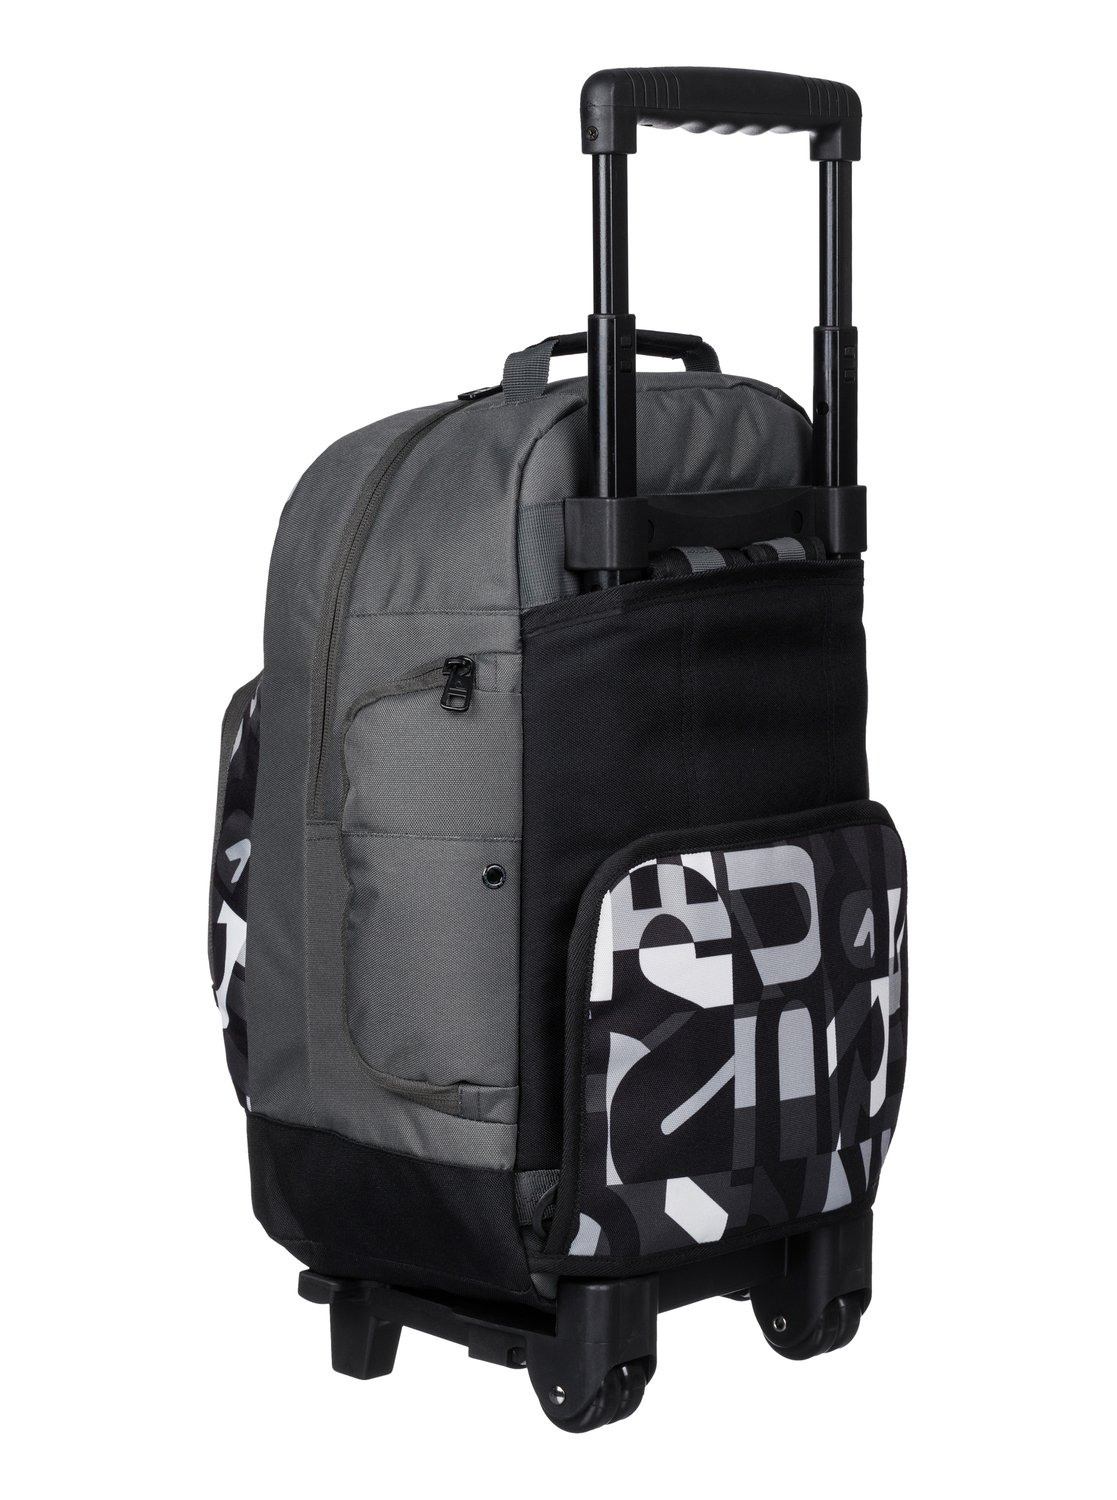 Hall Pass Wheelie Backpack 1153040801 | Quiksilver